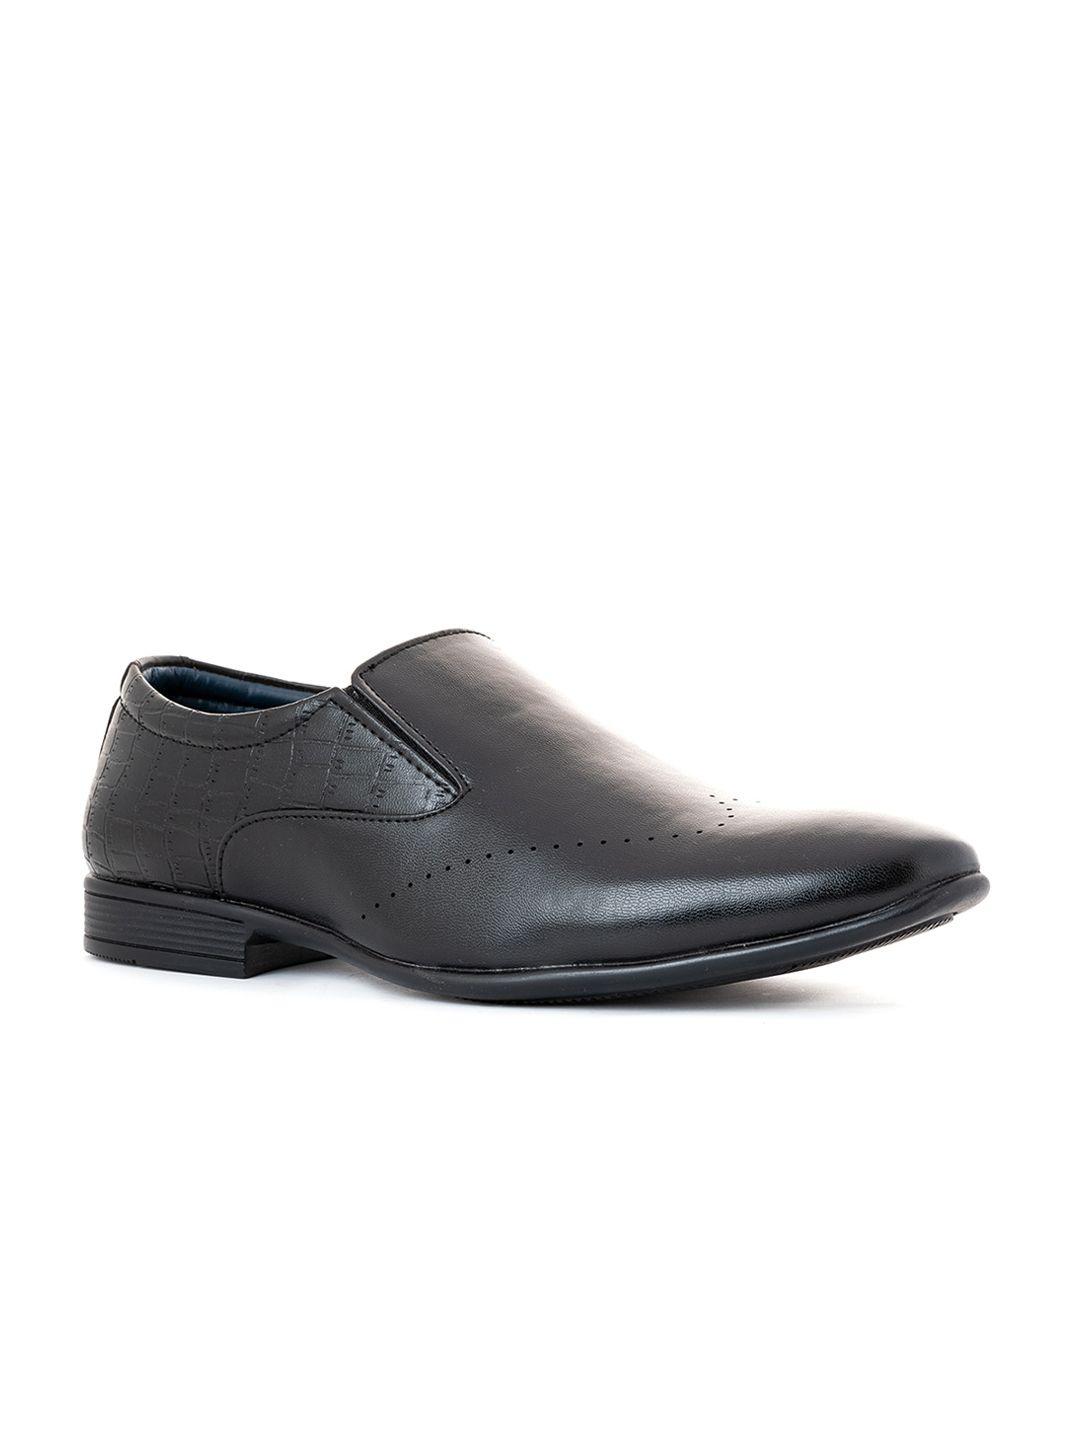 khadims-men-black-perforations-slip-on-formal-shoe